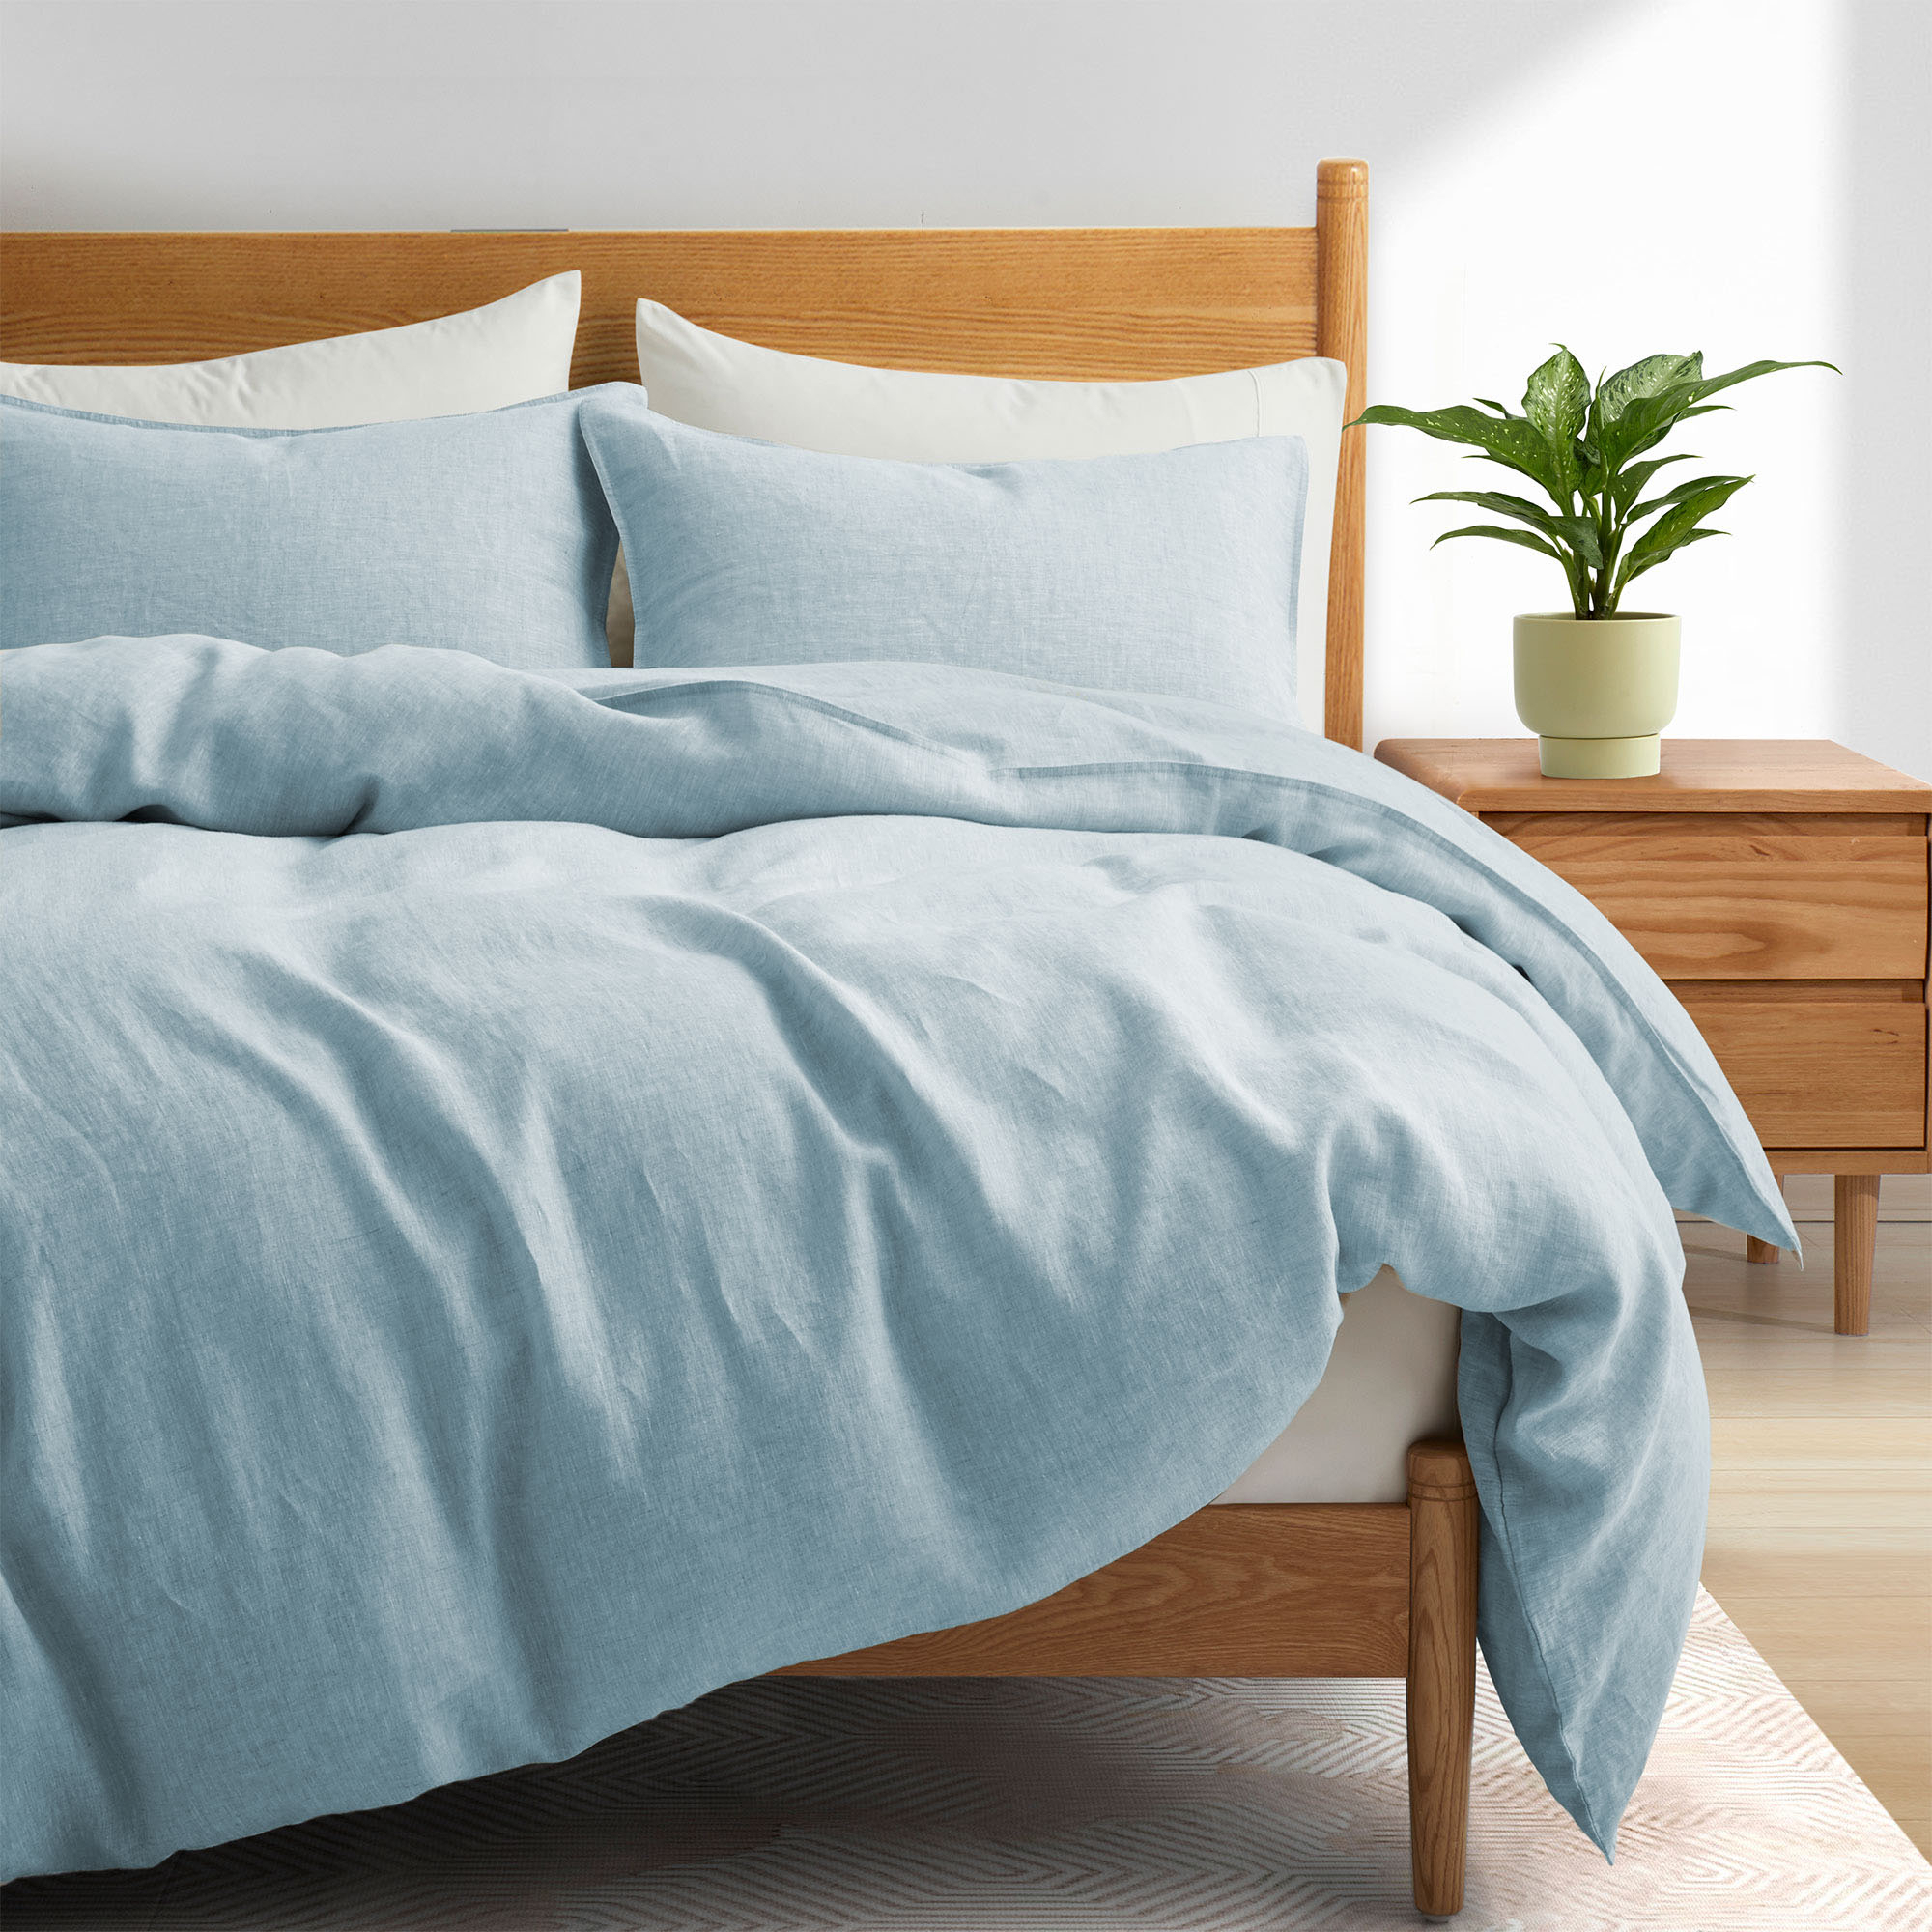 Premium Flax Linen Duvet Cover Set With Pillow Shams Breathable Moisture Wicking Bedding Set - Light Blue, King